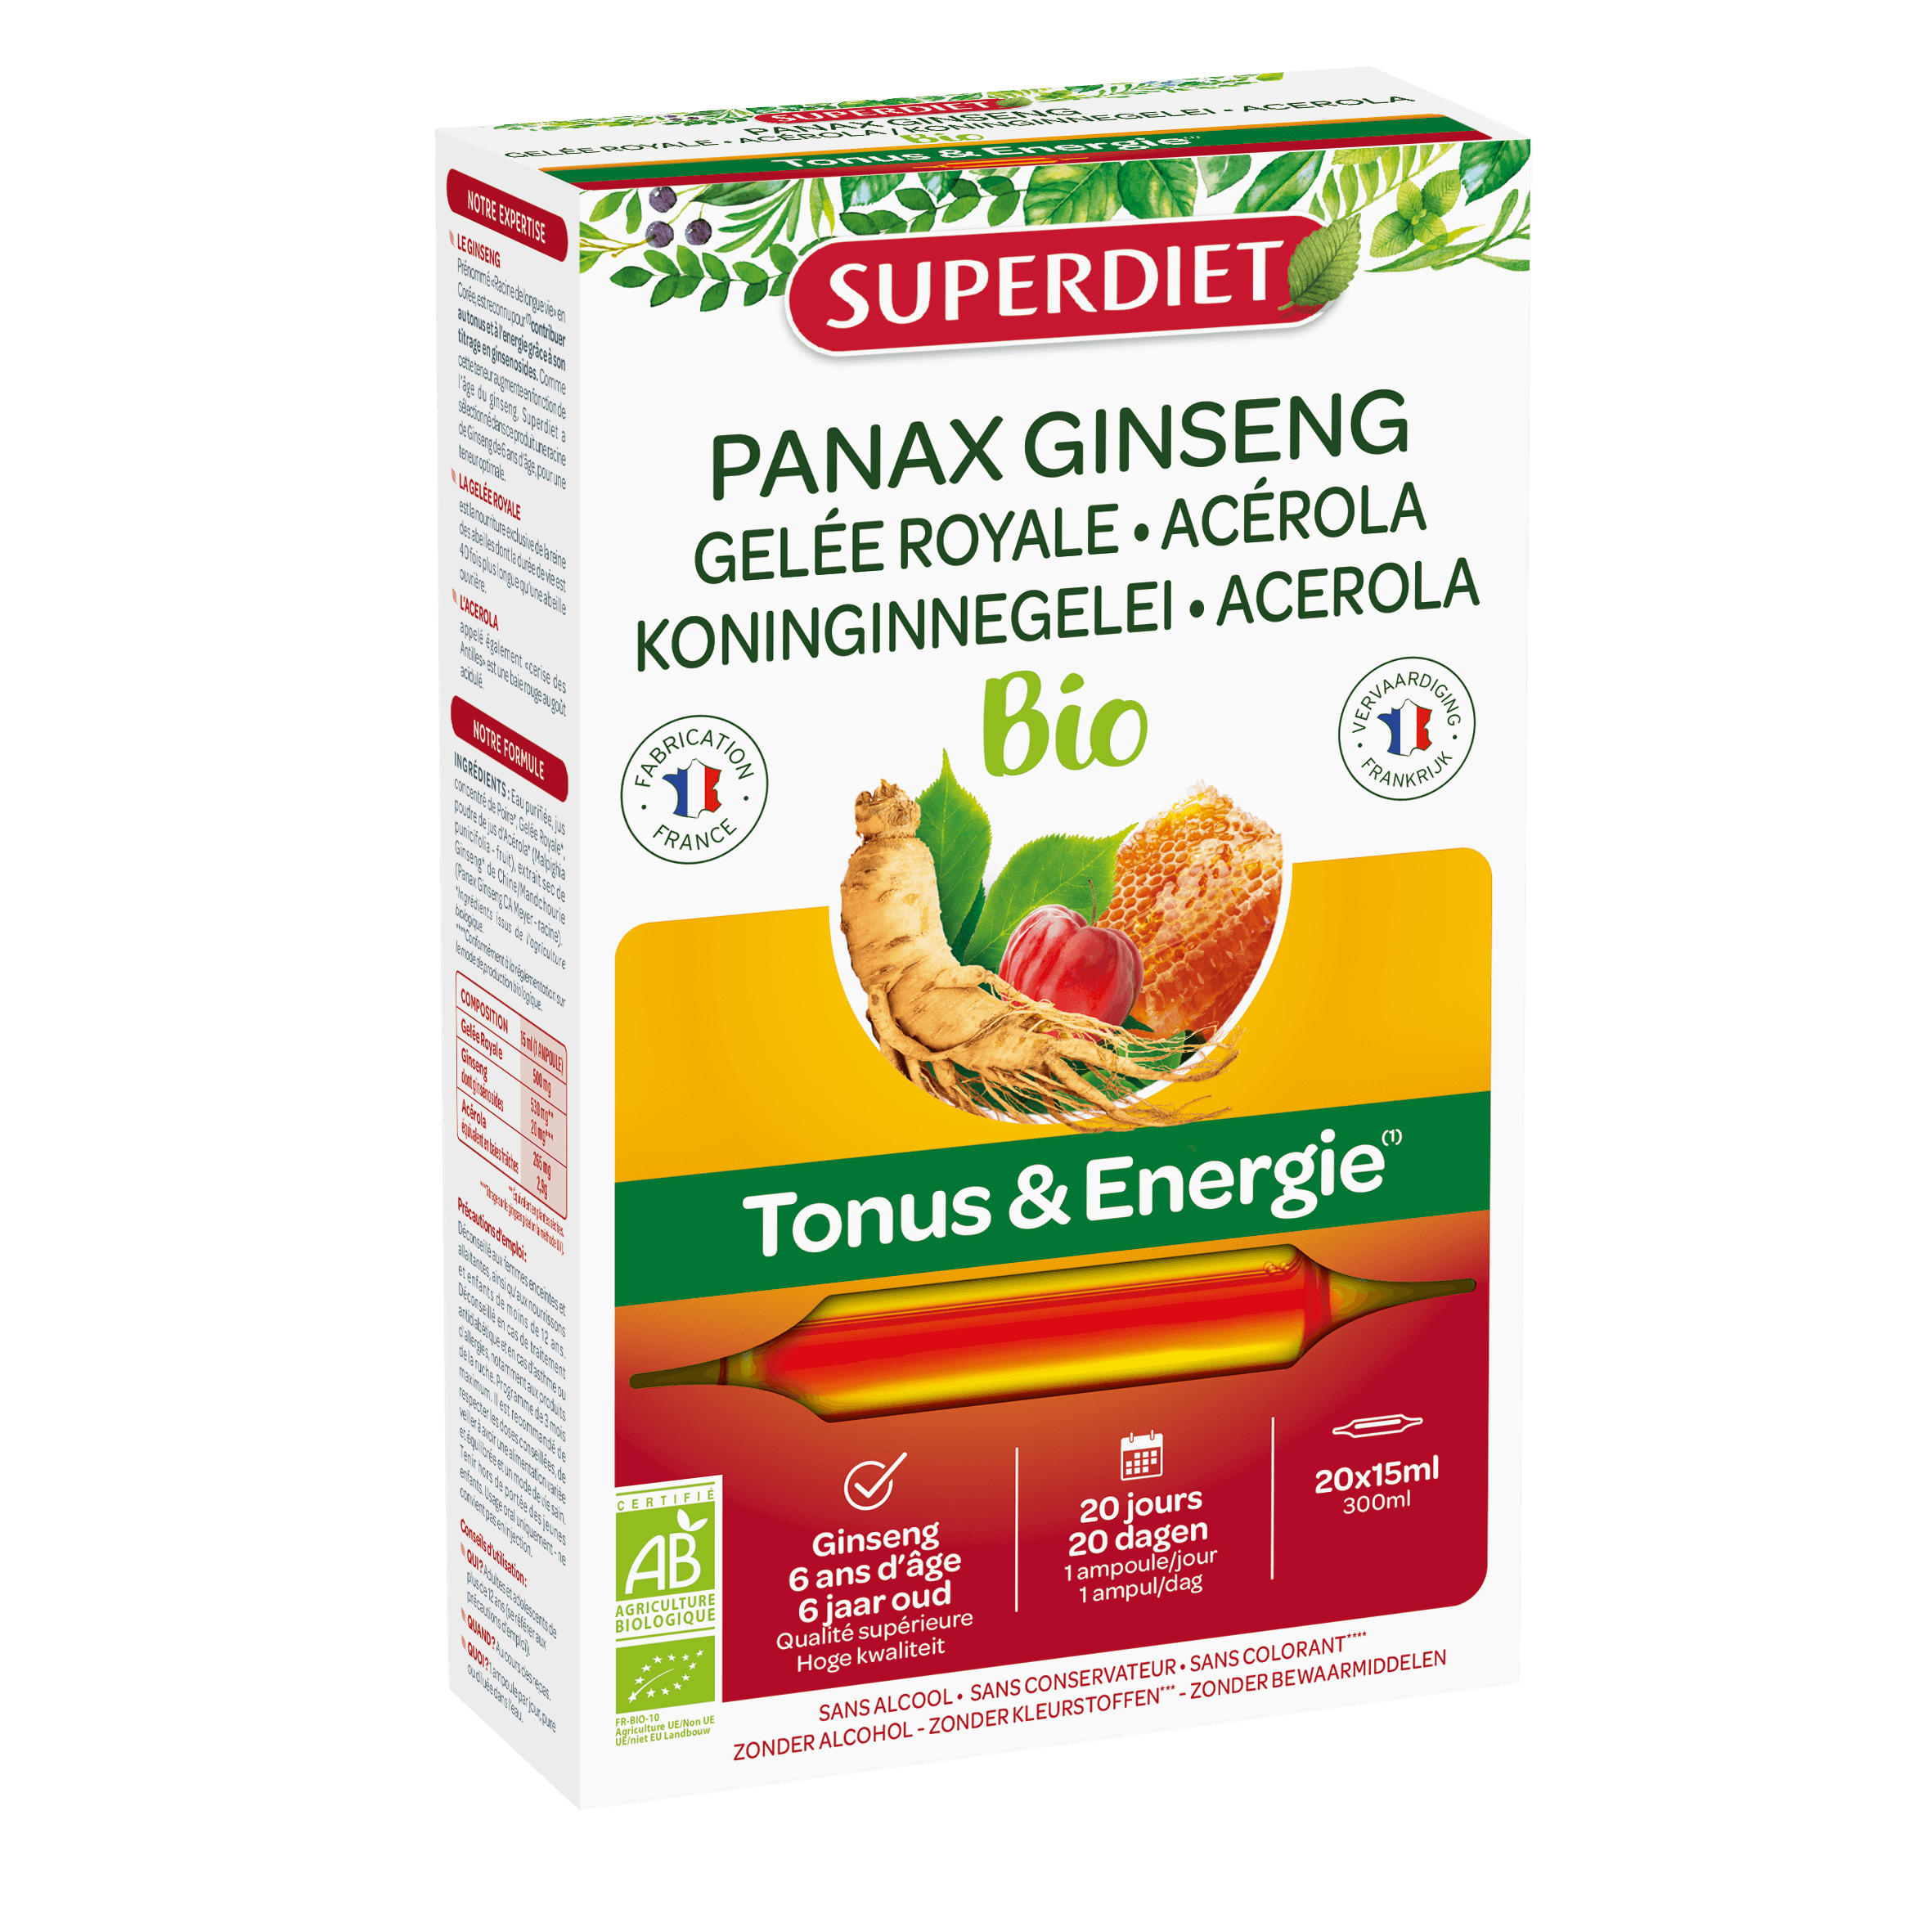 Super Diet Ginseng gelée royale acerola bio 20x15ml PL 483/277